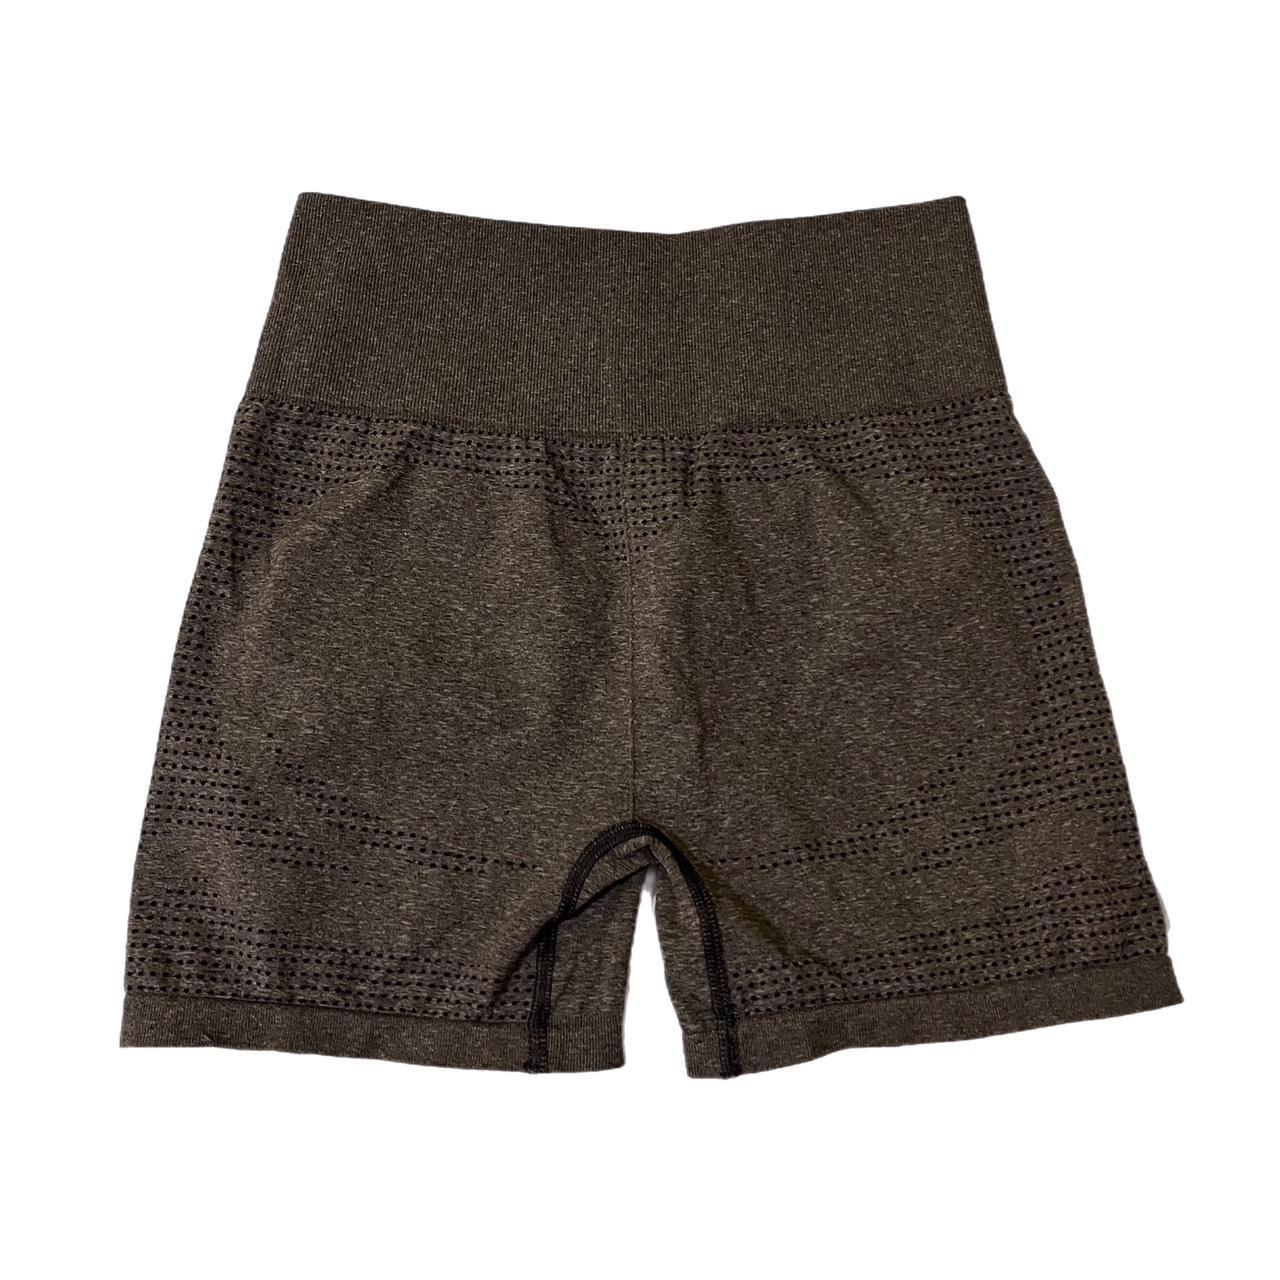 Grey Vital Seamless 2.0 Shorts, Size